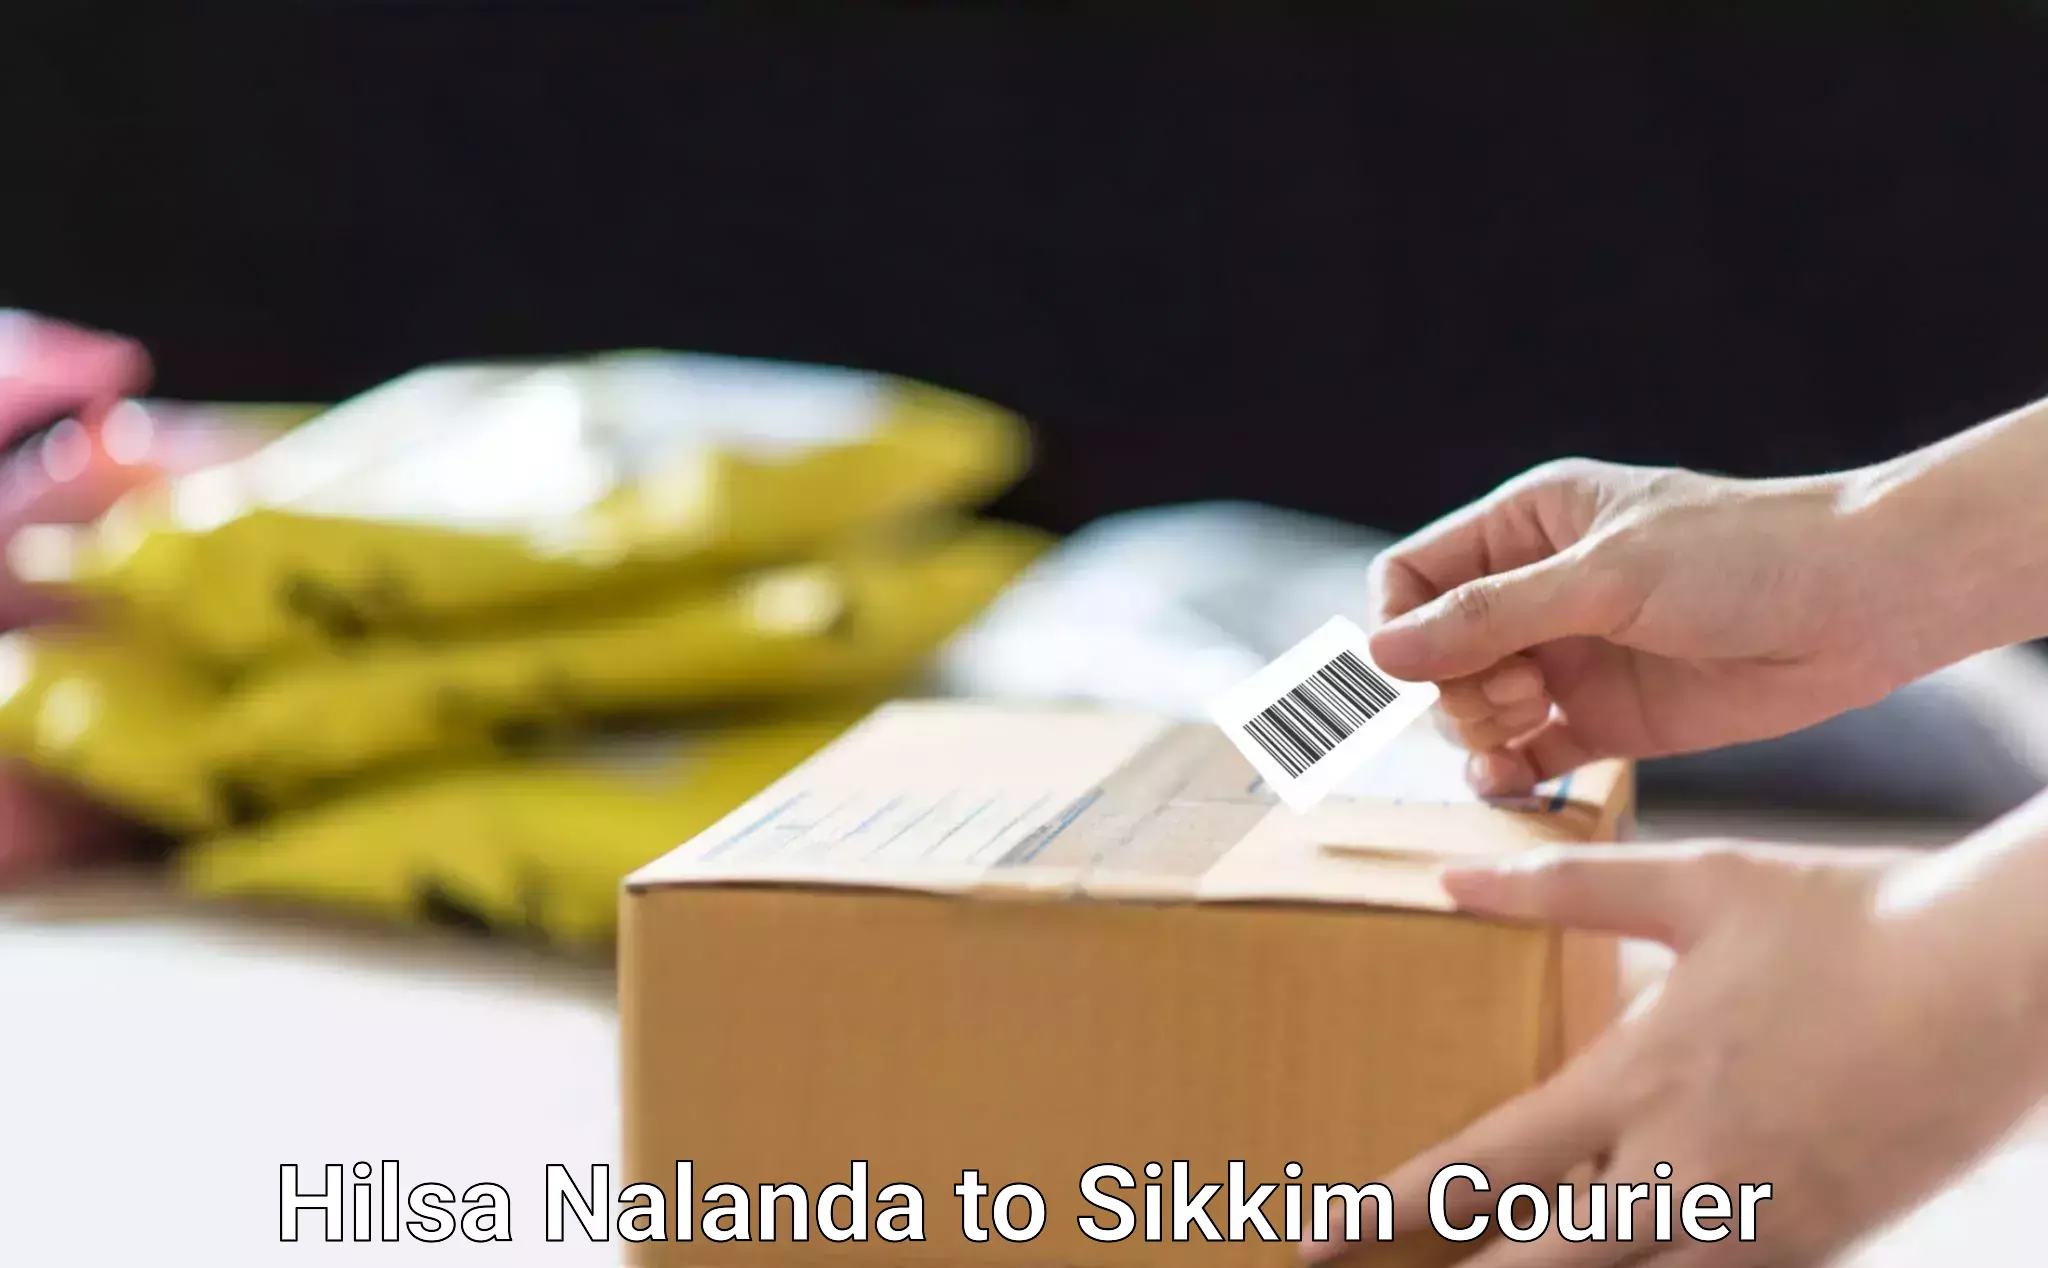 Premium moving services Hilsa Nalanda to Pelling